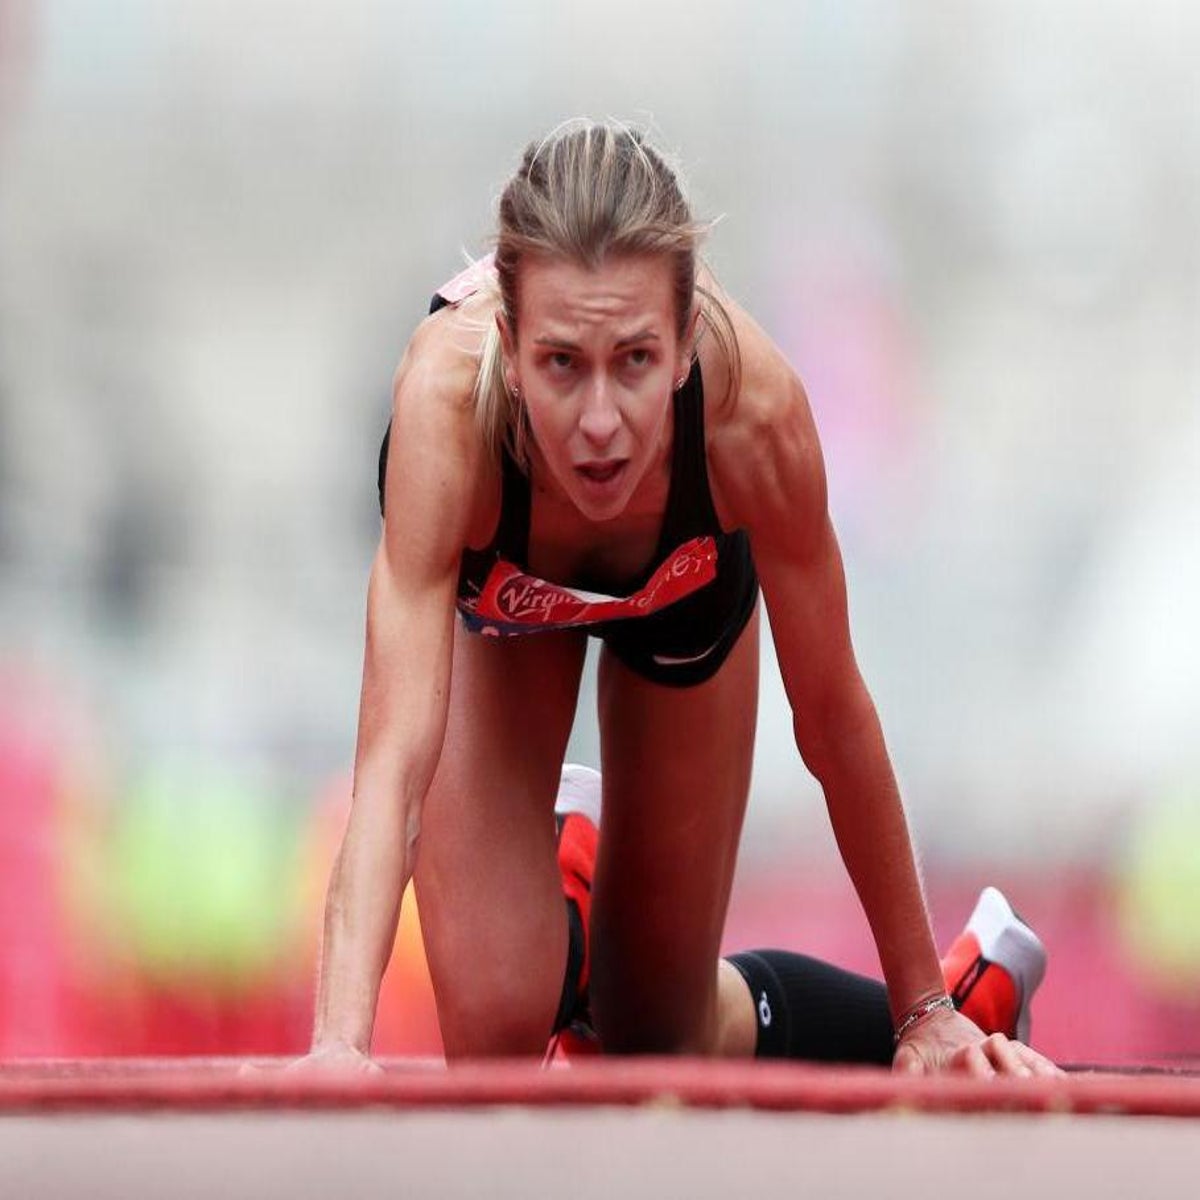 London Marathon: Hayley Carruthers on crawling across the line - BBC News